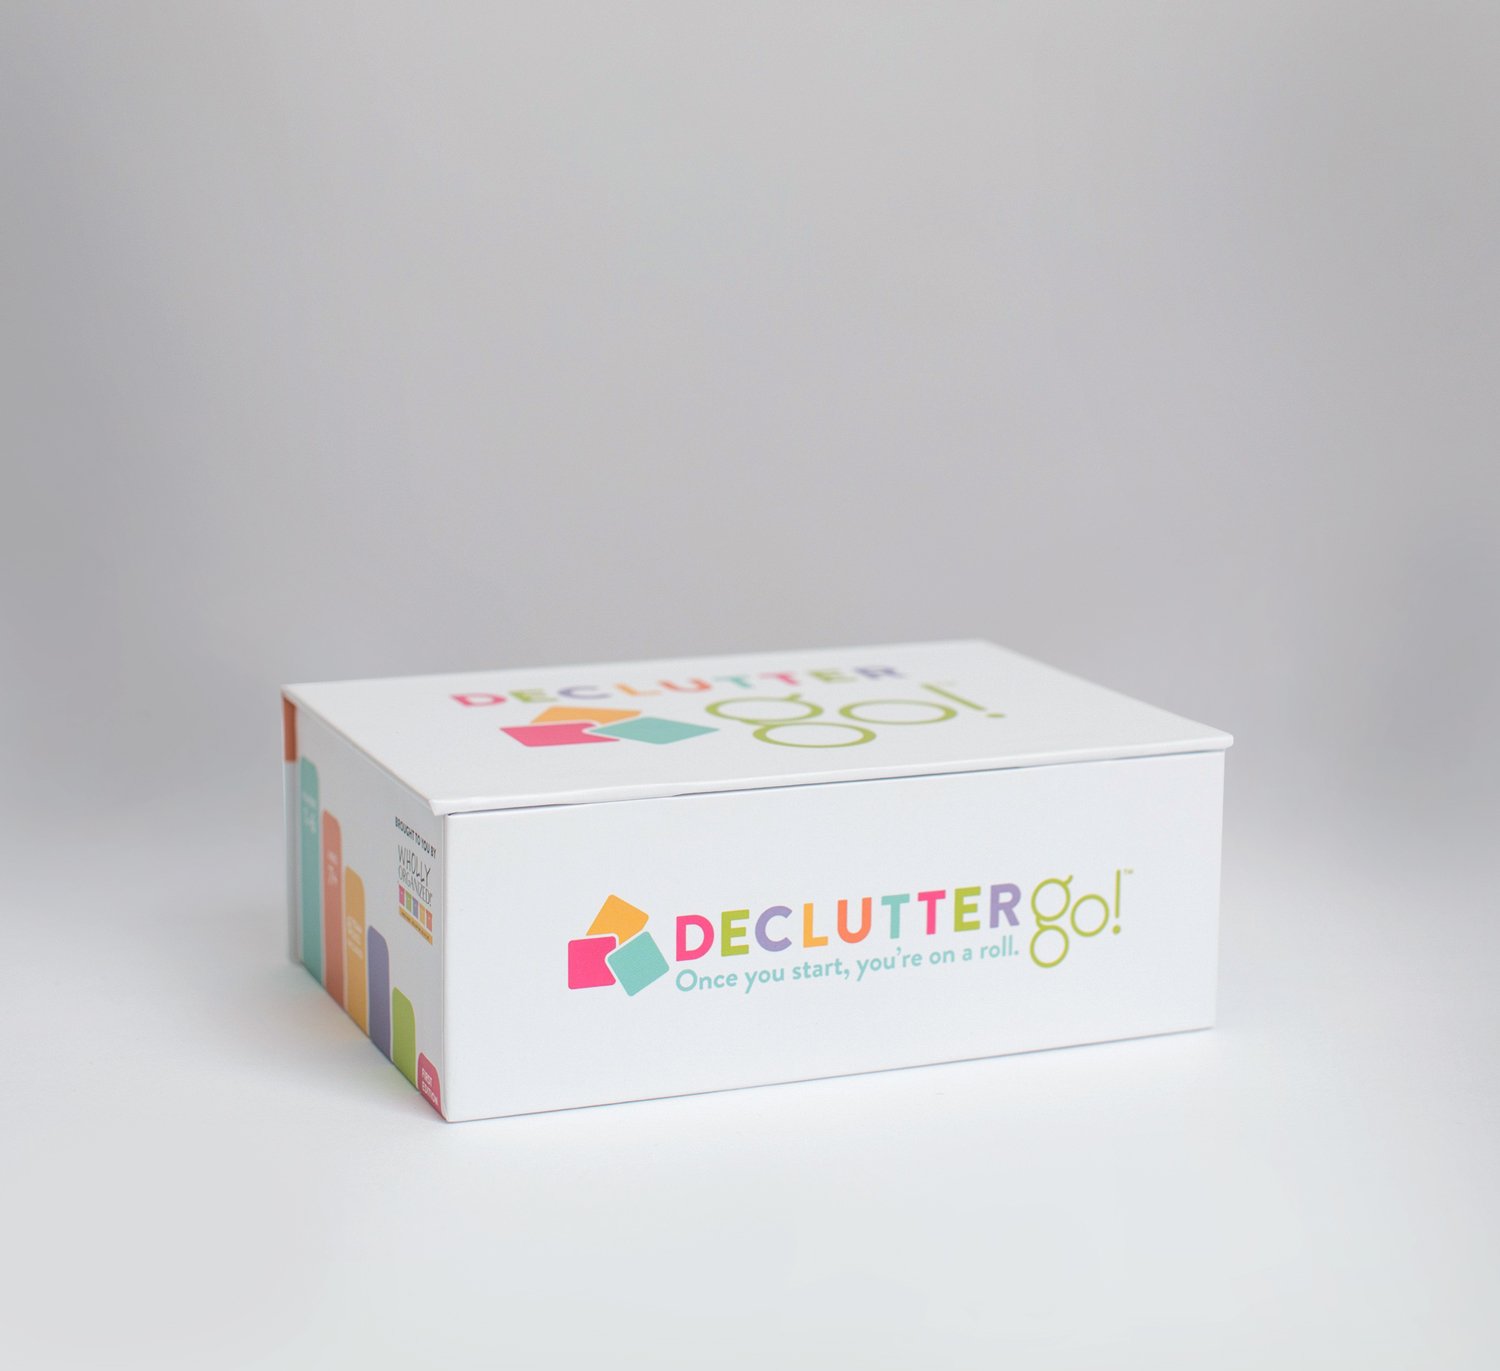 Declutter Go Game Box.jpg